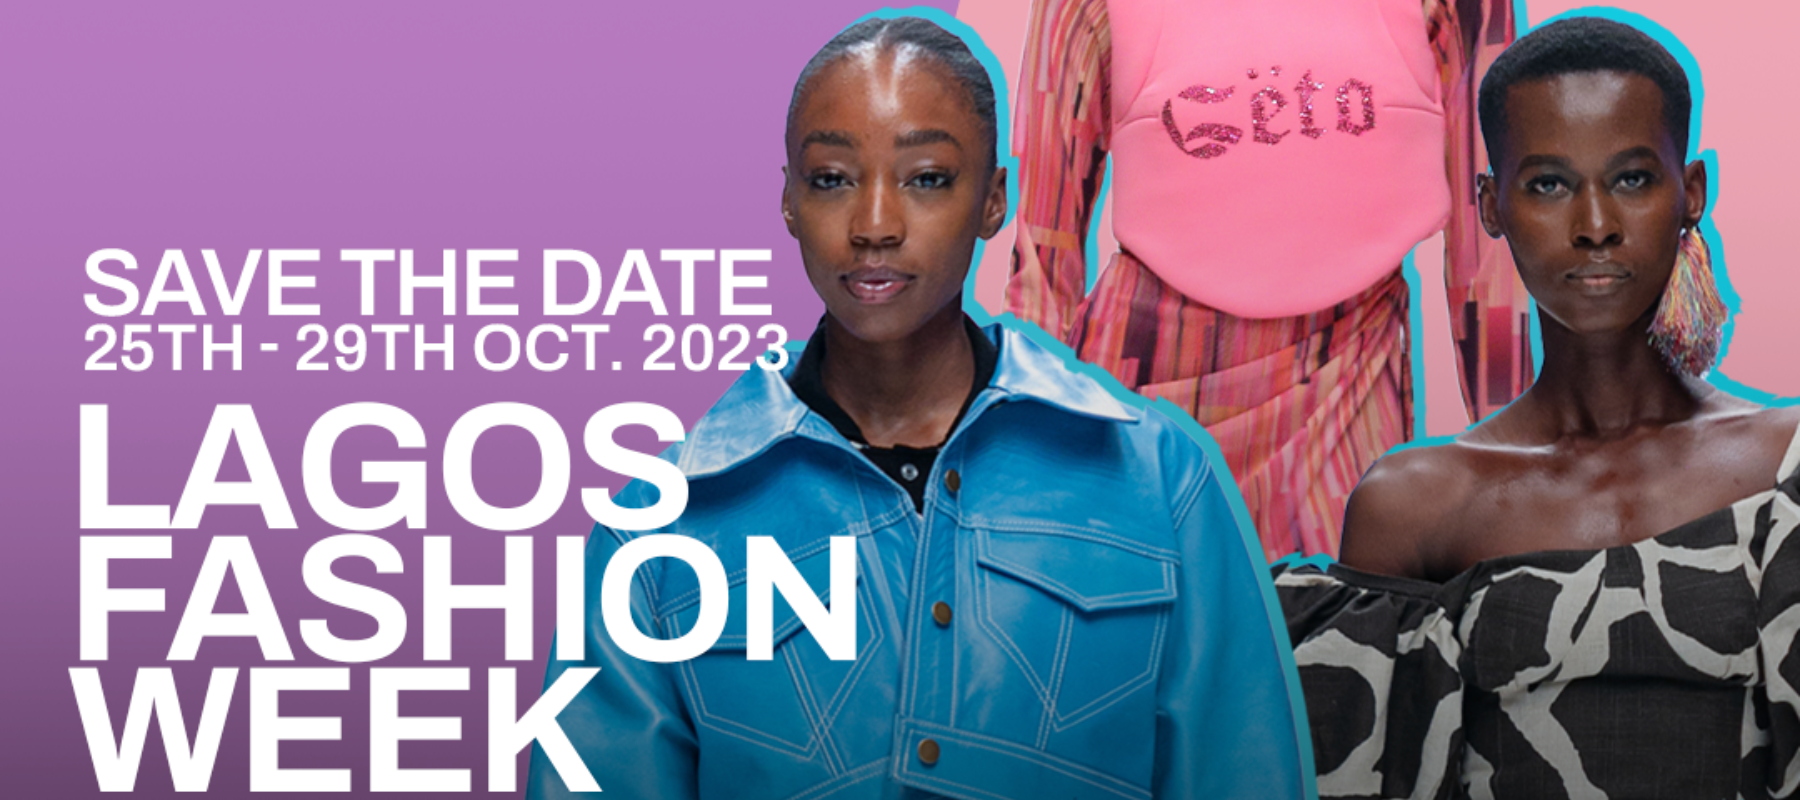 Lagos Fashion Week Returns for its 12th Edition